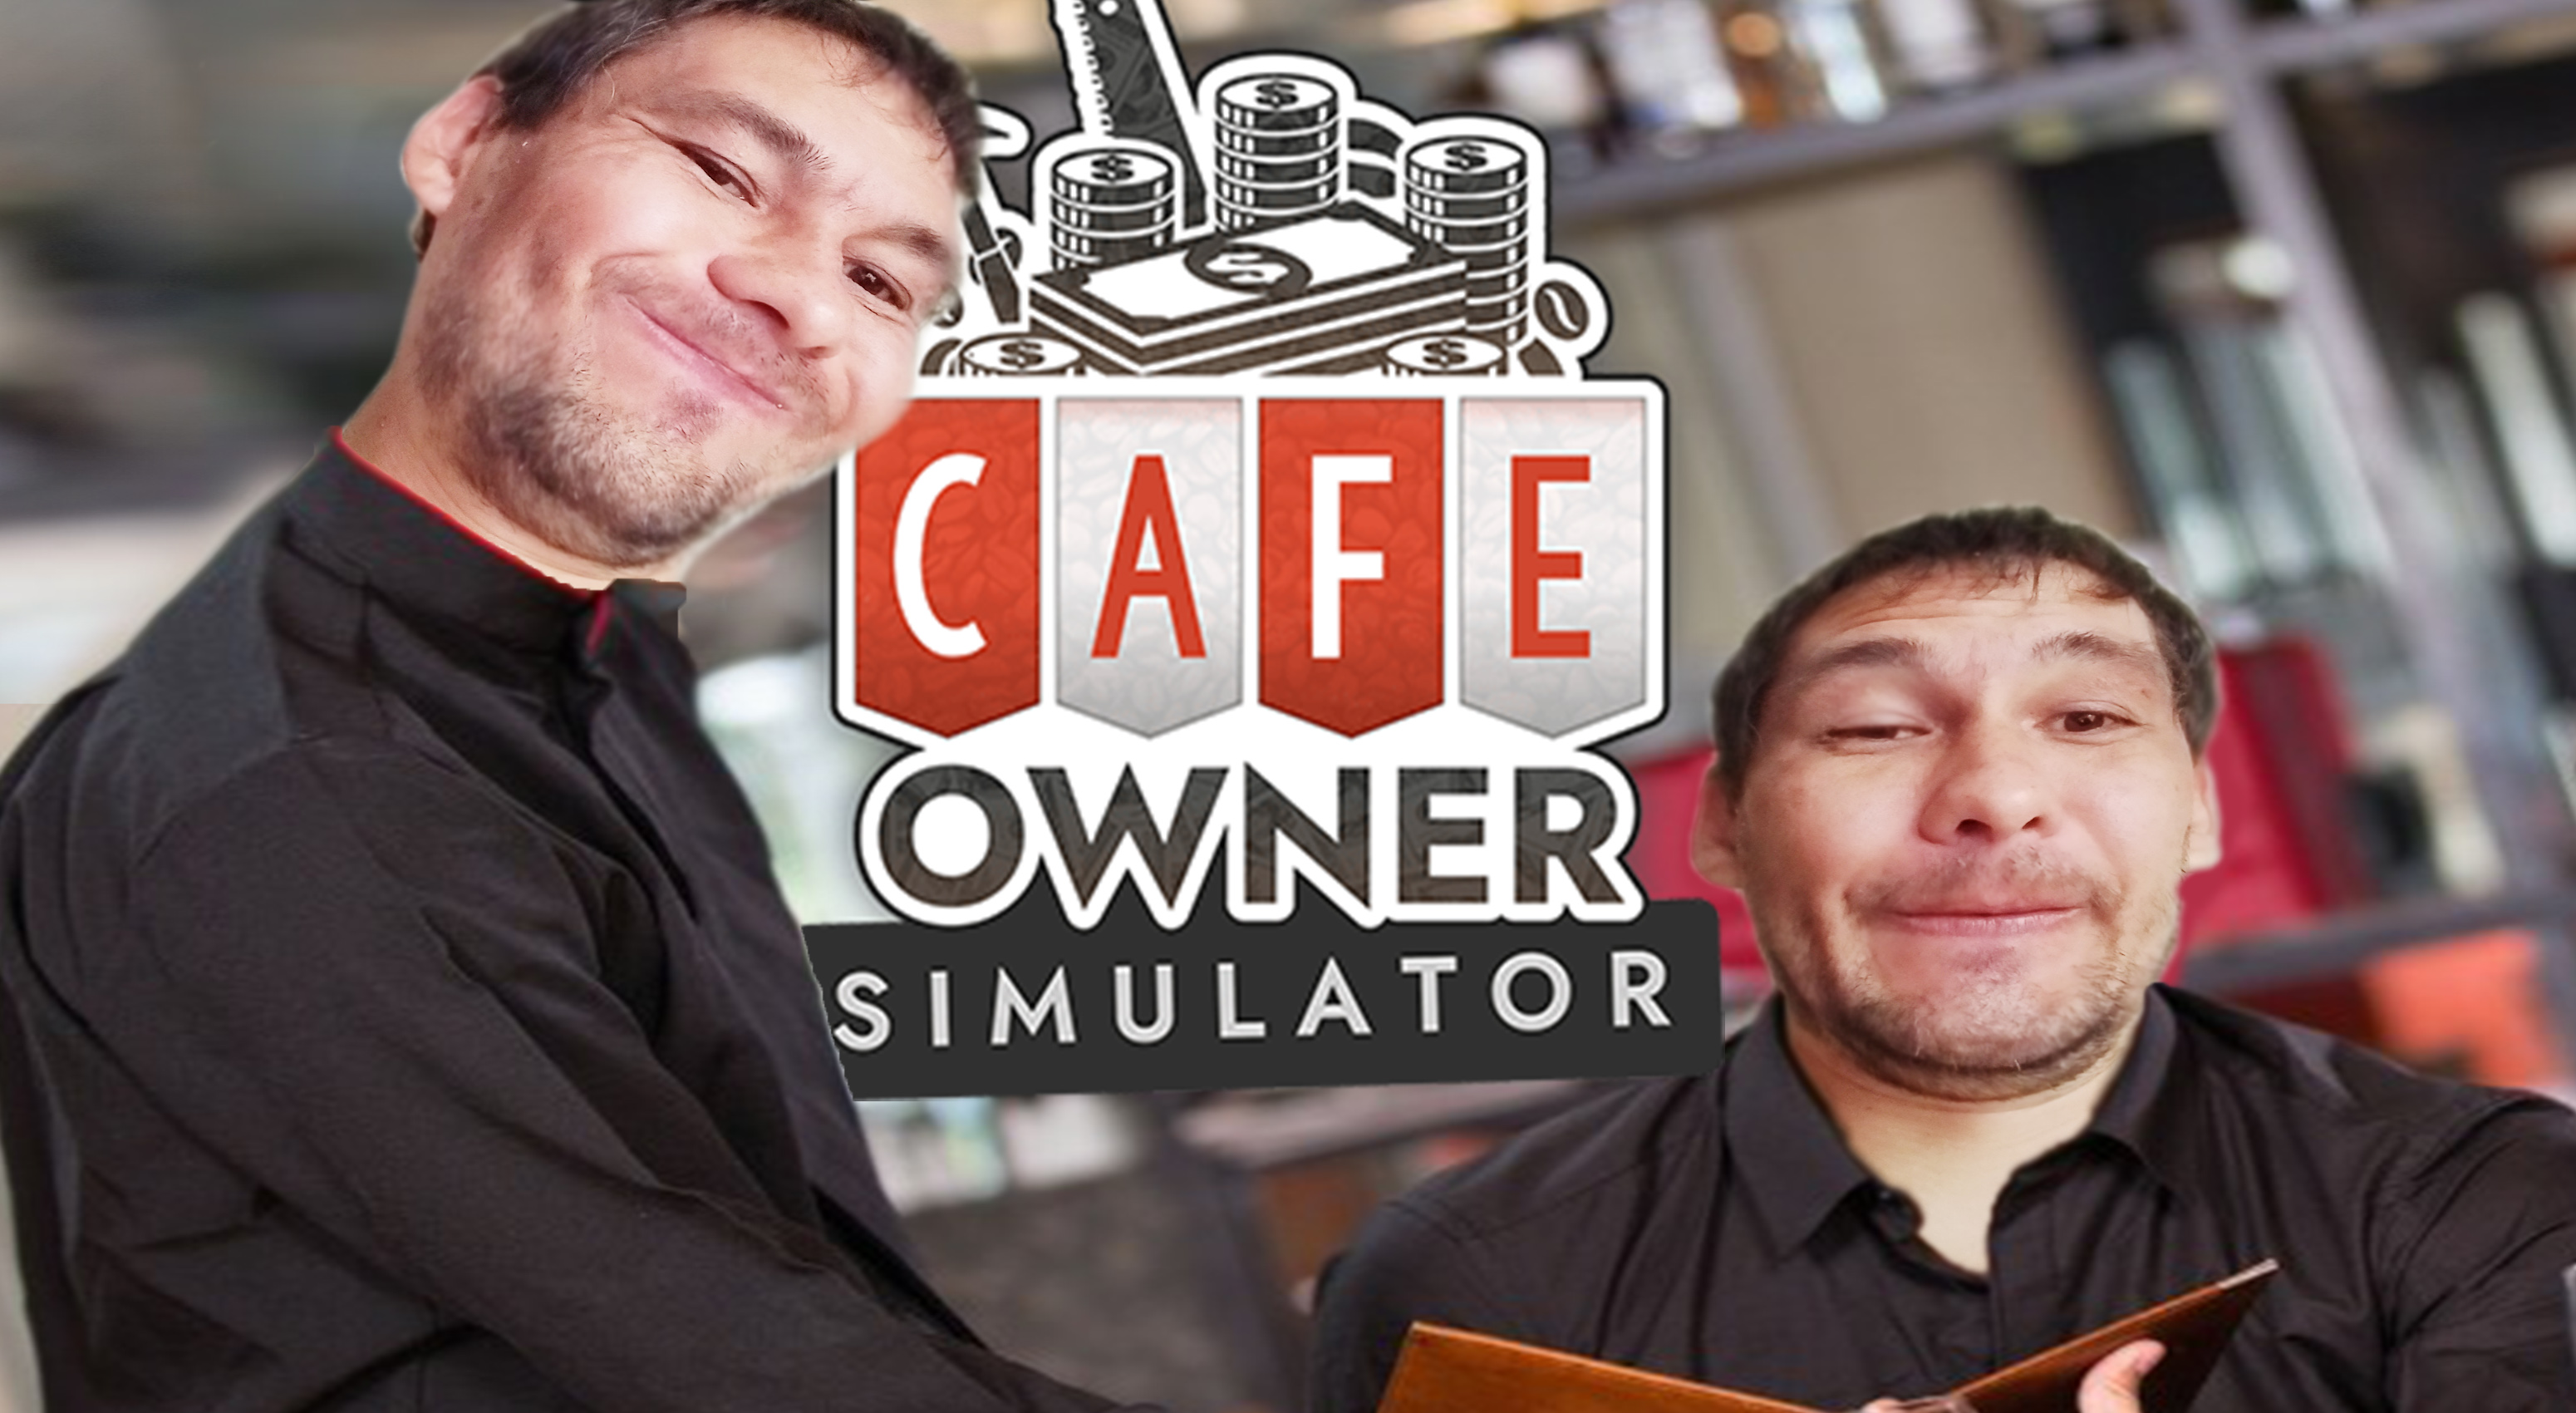 Cafe owner simulator стим фото 85